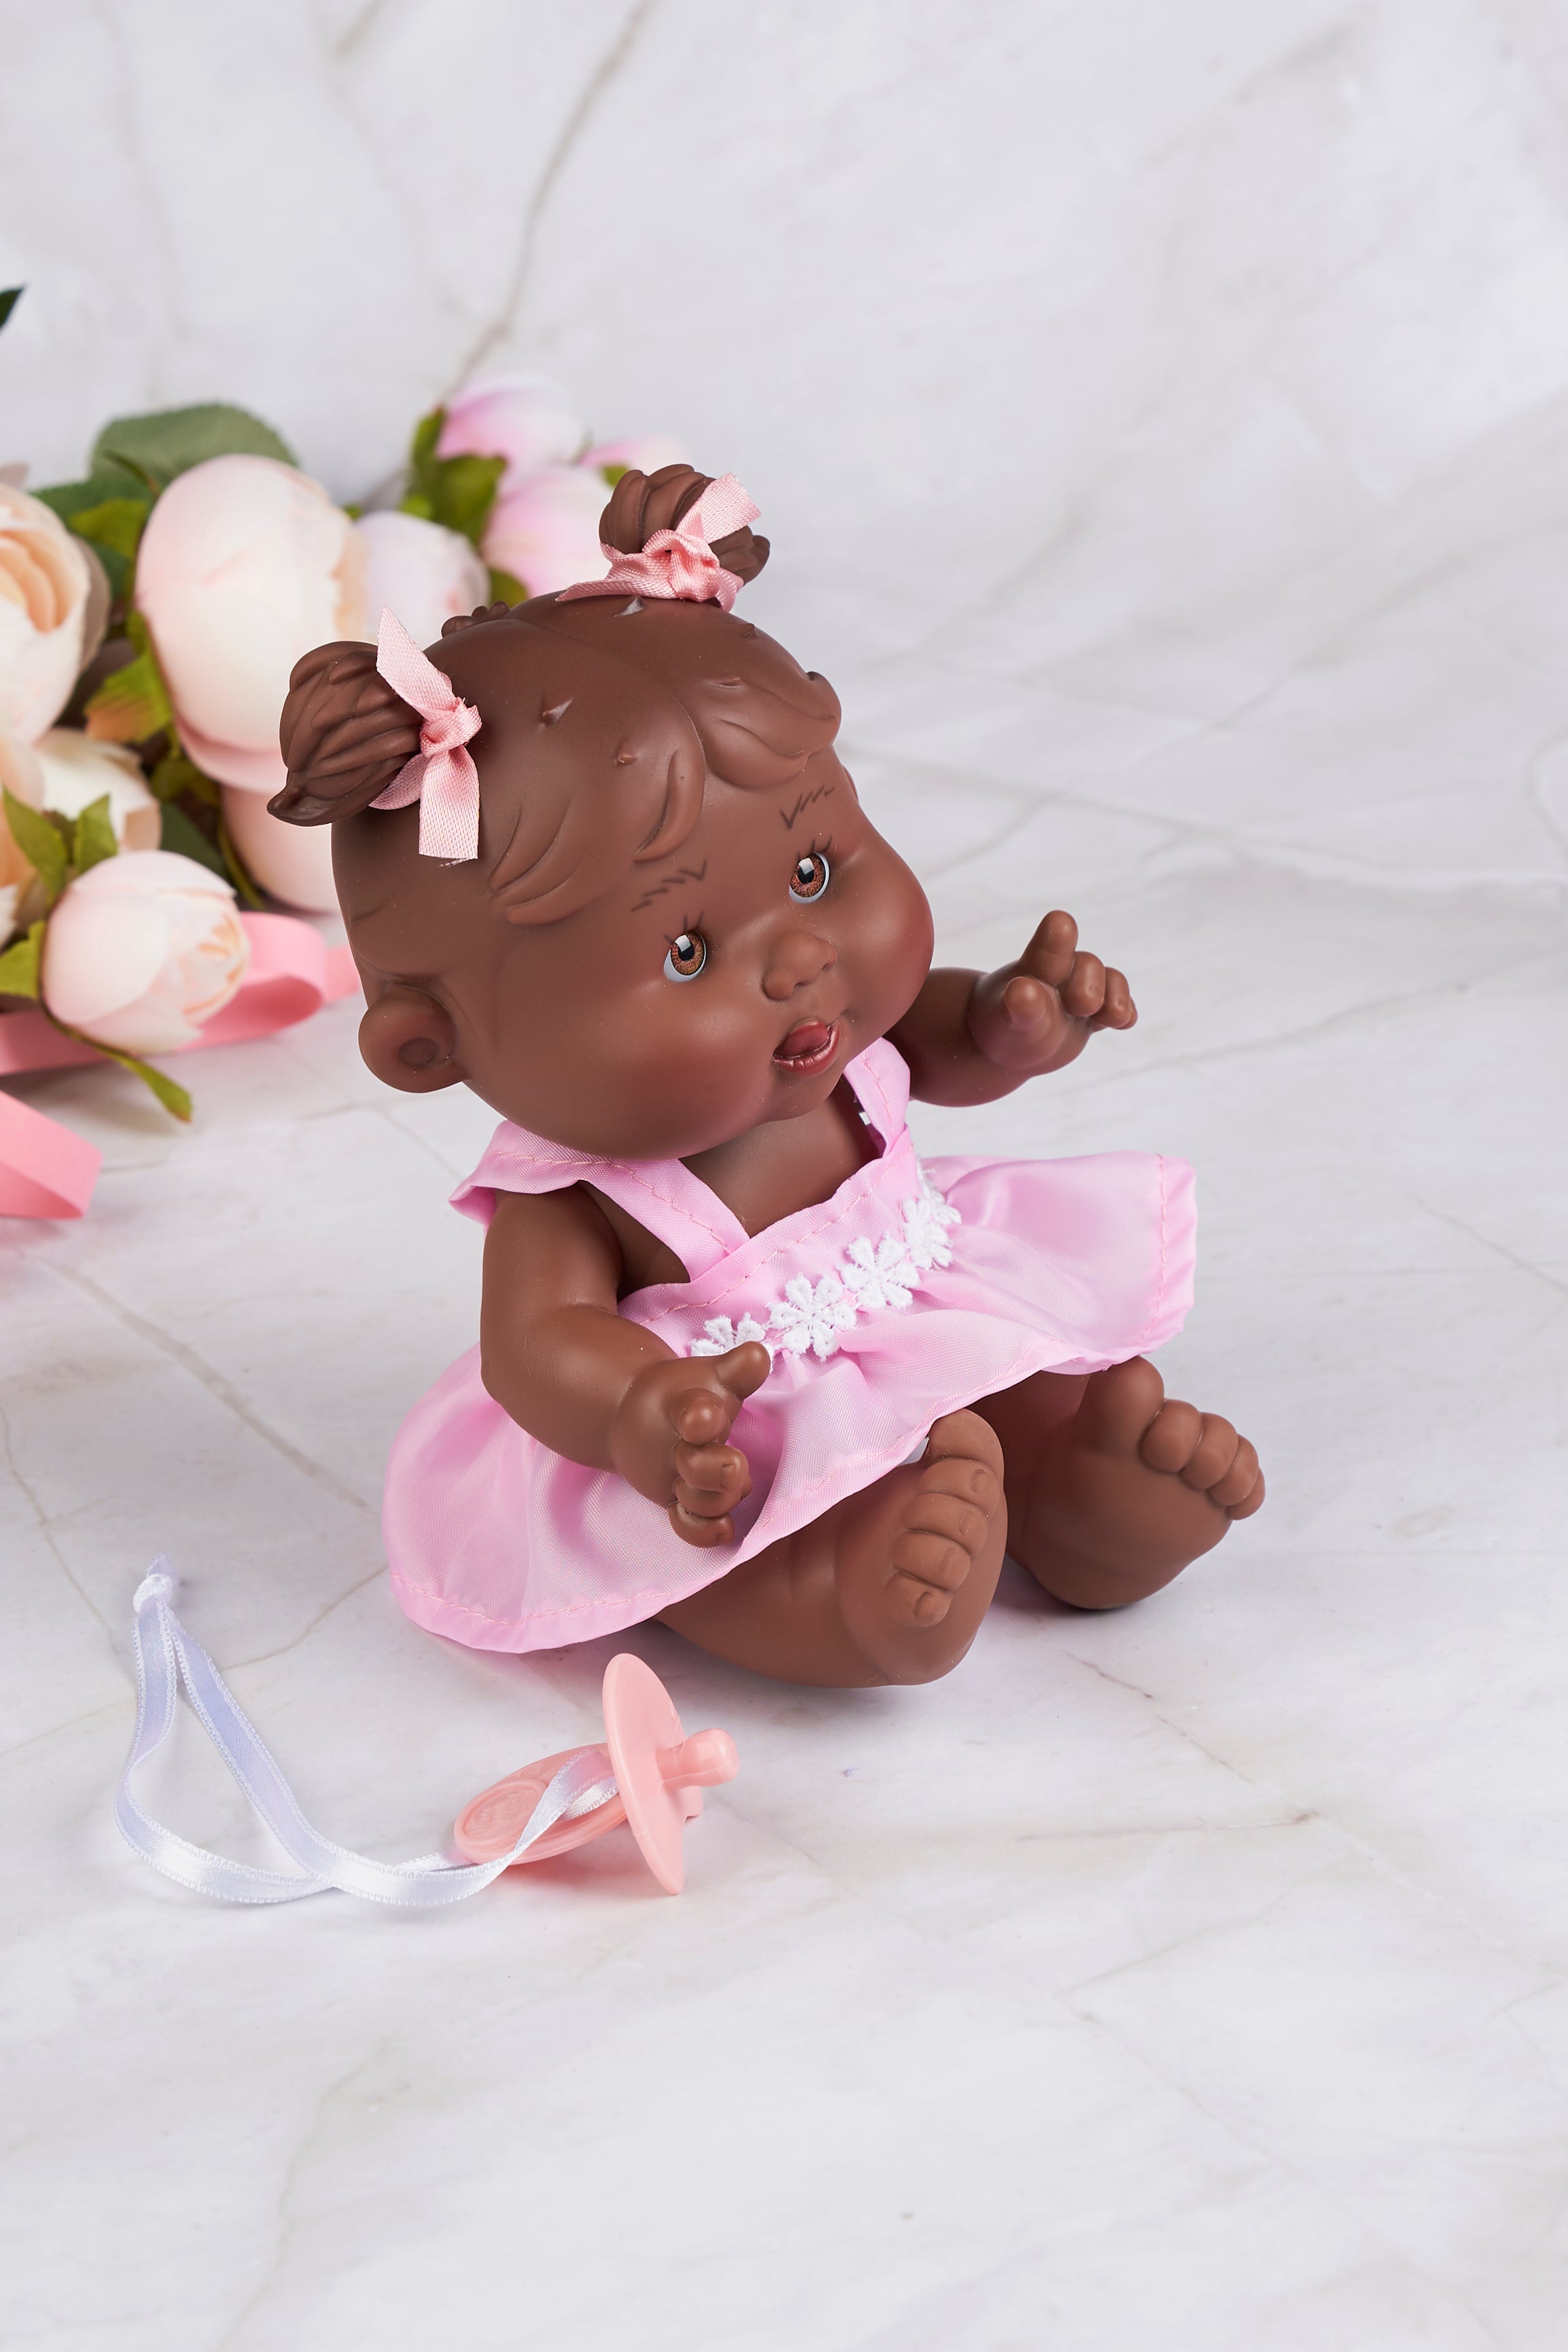 Papusa Parfumata Pepotines Afro, cu Rochie Bretele roz Model Strengar, 21 cm 0494 Nines - Camera Bebelusului